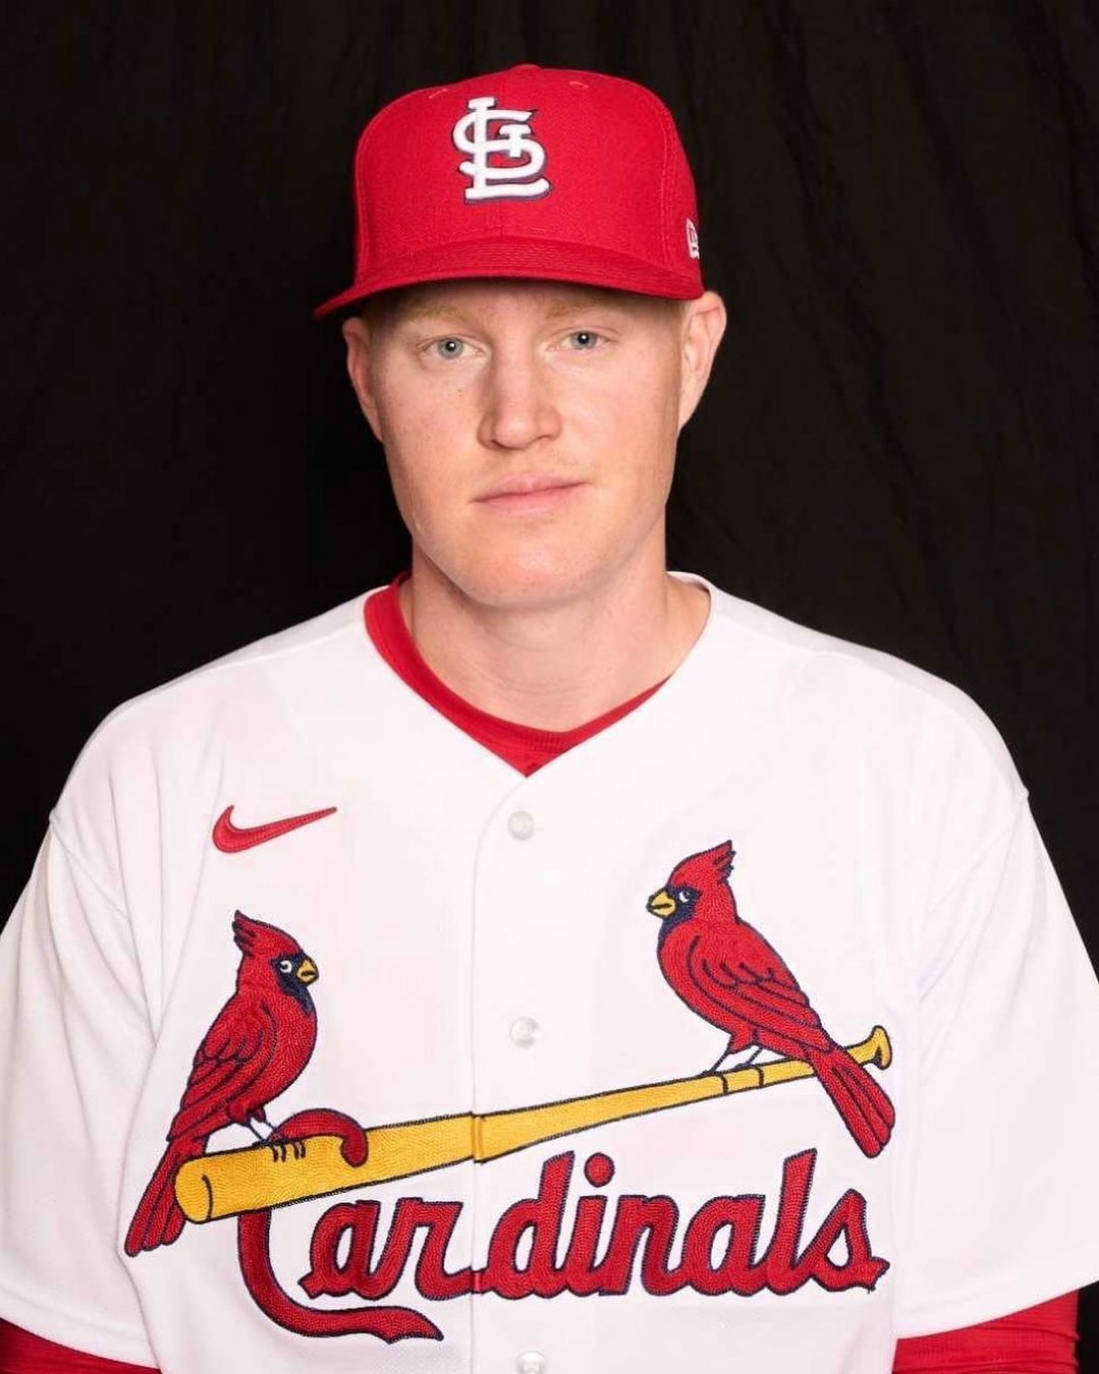 Brett Hammit poses for a photo wearing a St. Louis Cardinals uniform